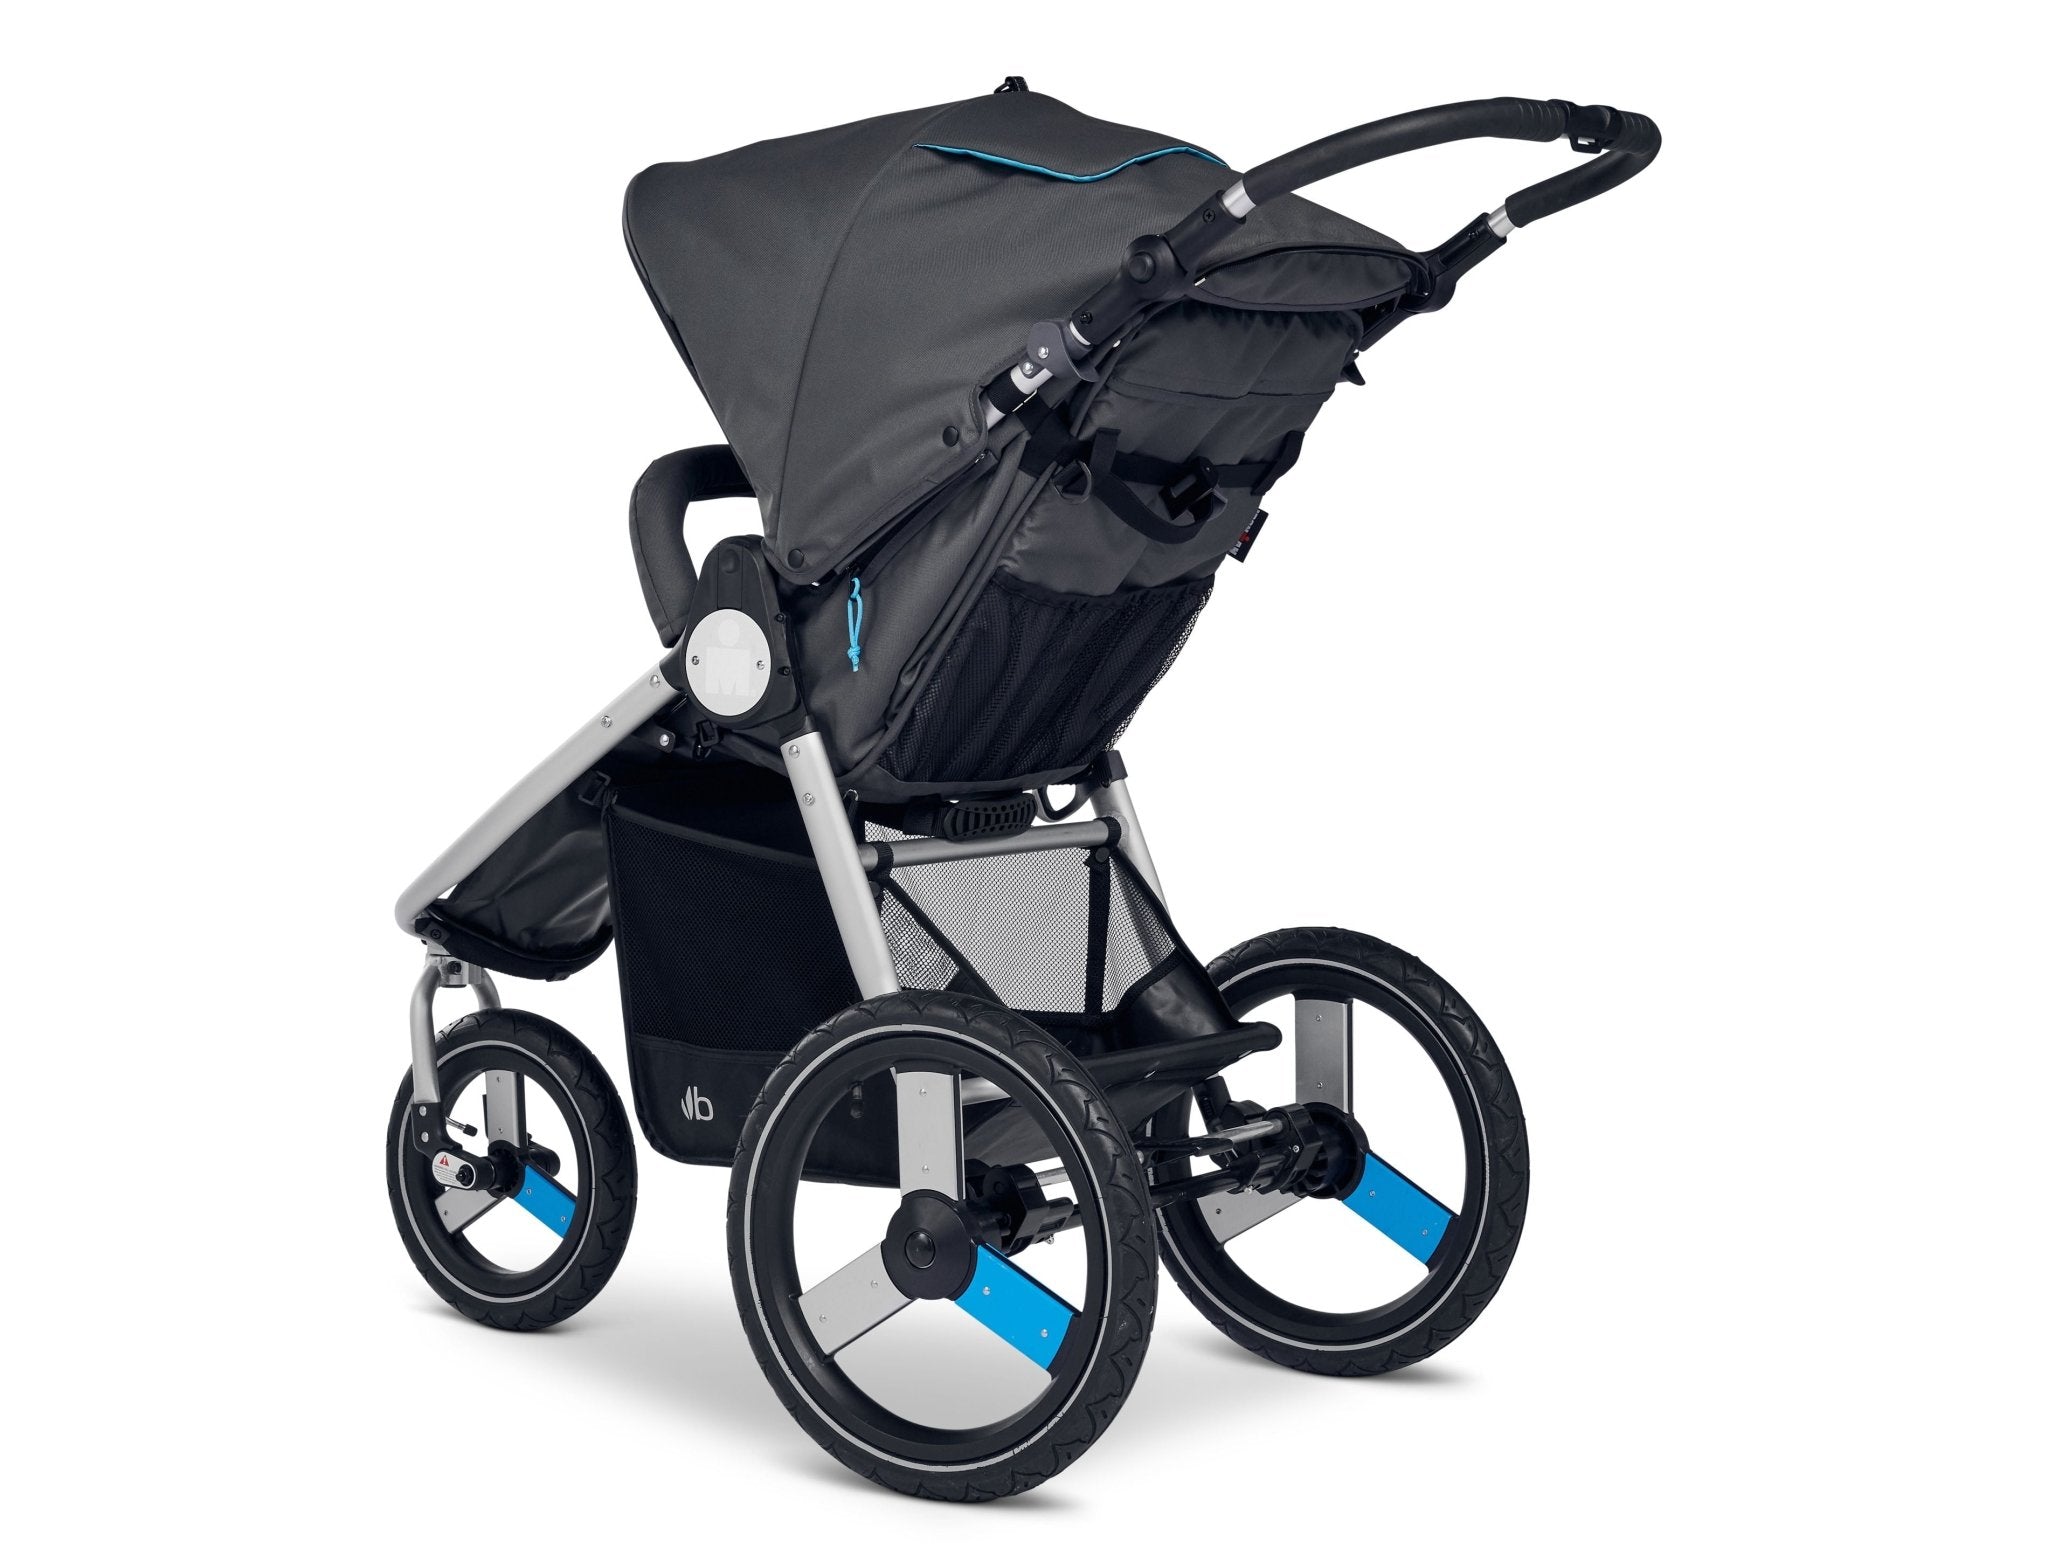 Bumbleride 2022 Speed Jogging Stroller - ANB Baby -850038887087$500 - $1000